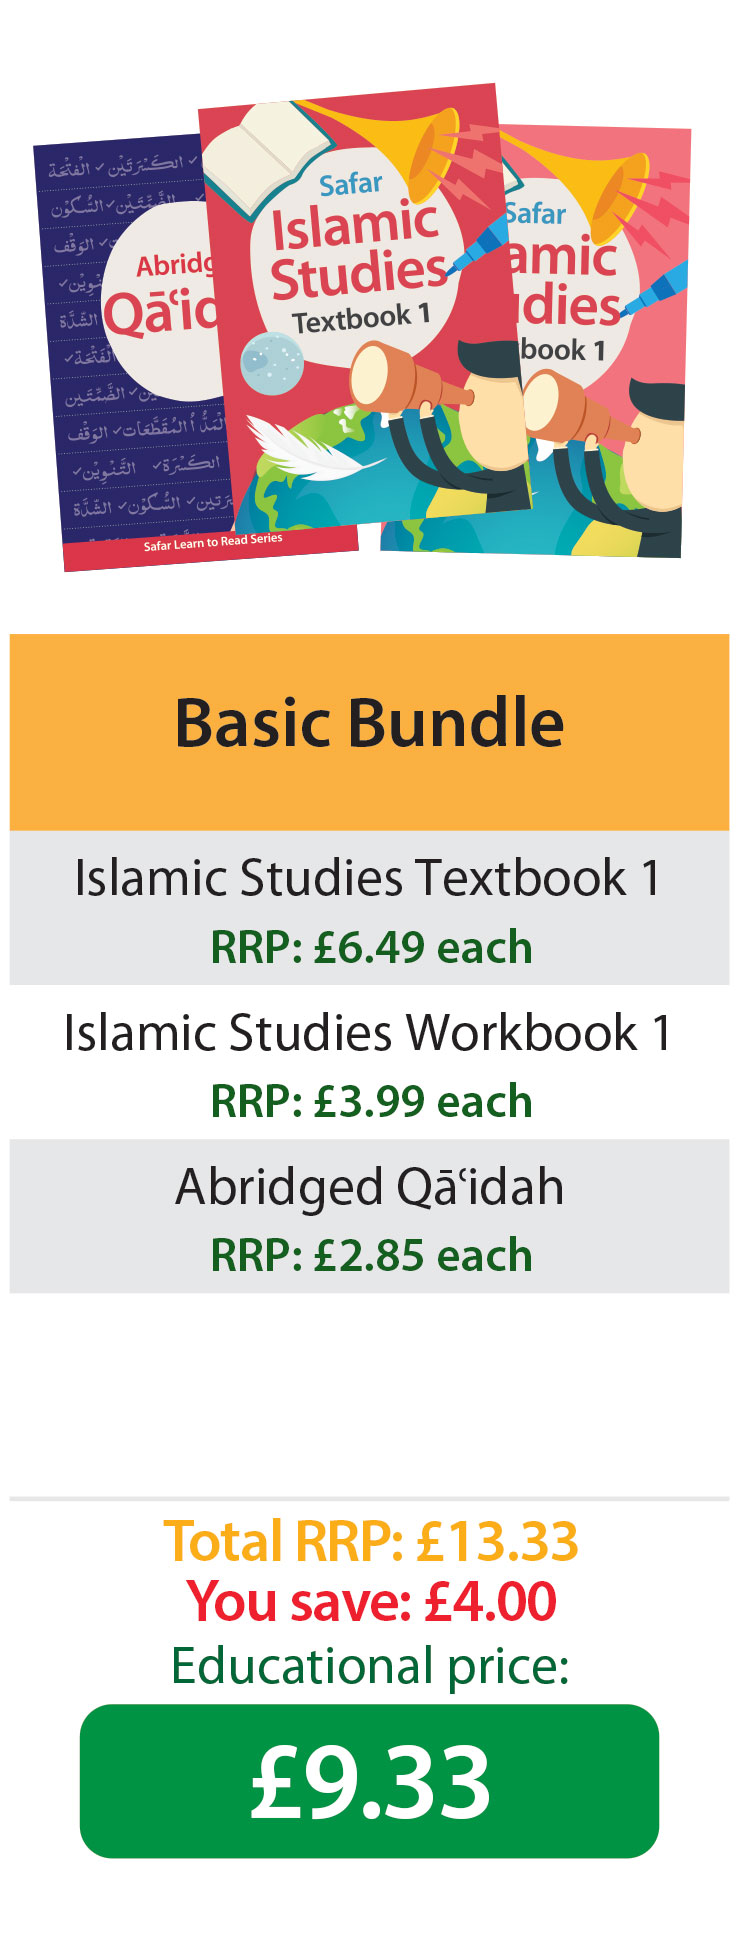 Bacis Bundle - Educational Cost Calculator: Safar Publications Islamic Curriculum